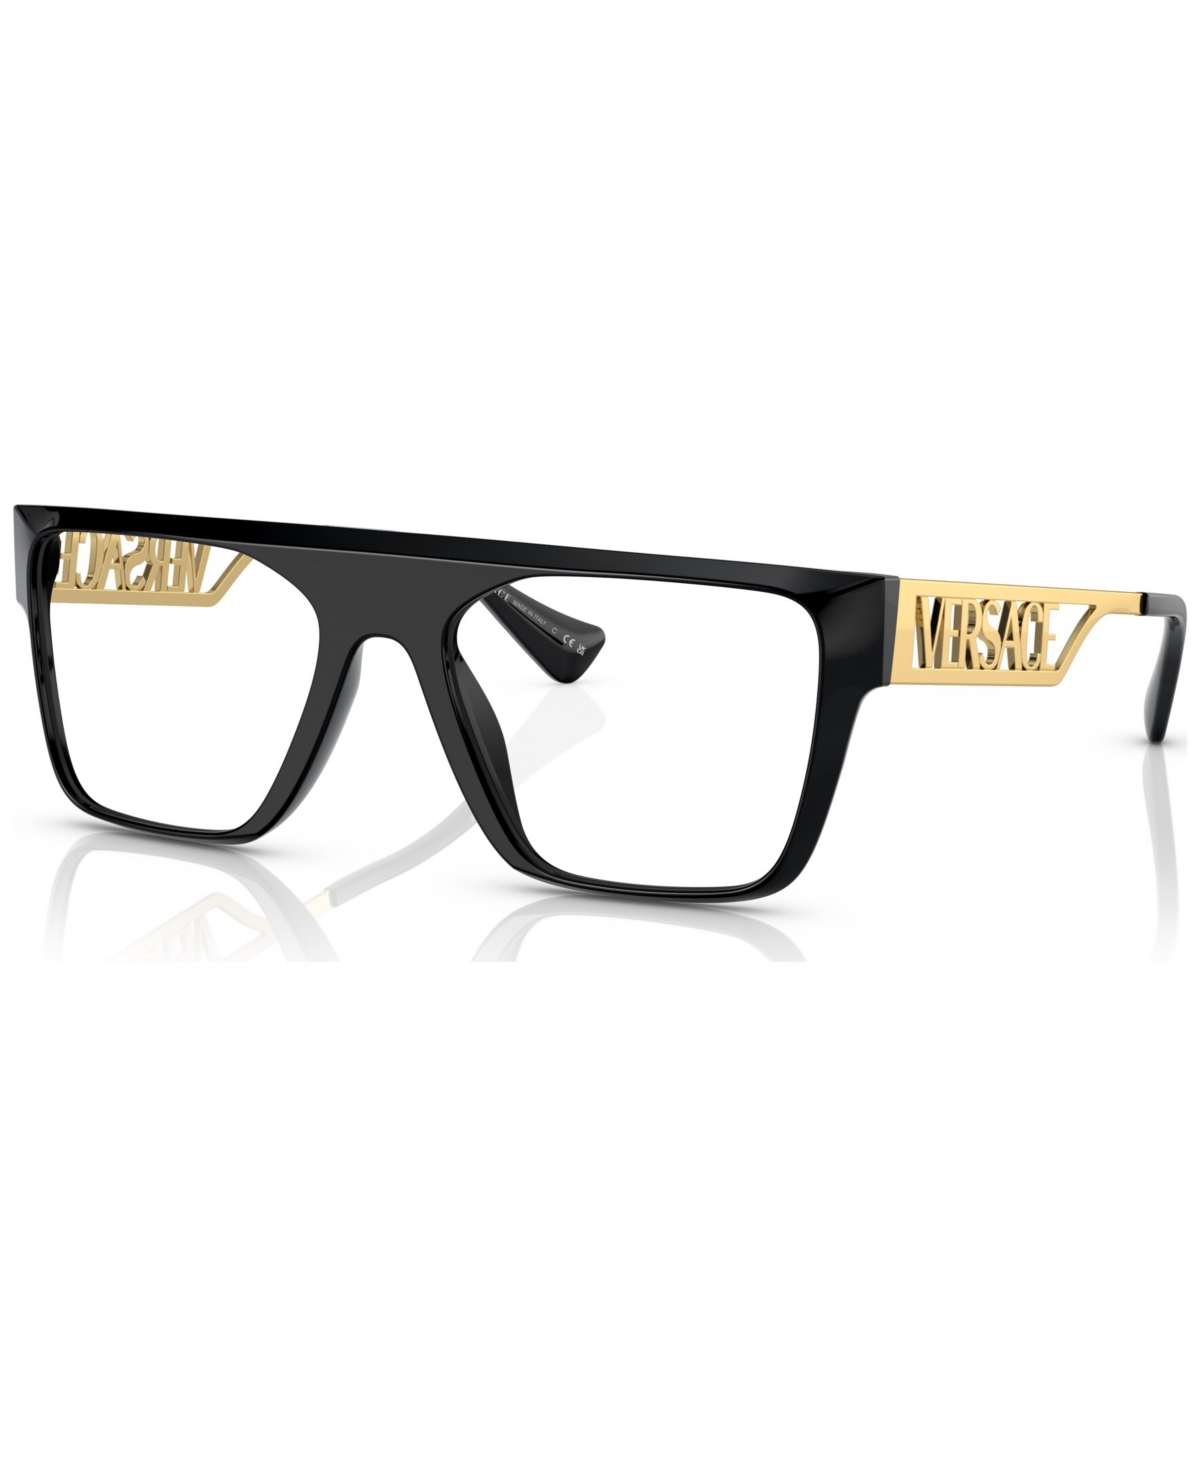 Men's Rectangle Eyeglasses, VE3326U55-o - Black